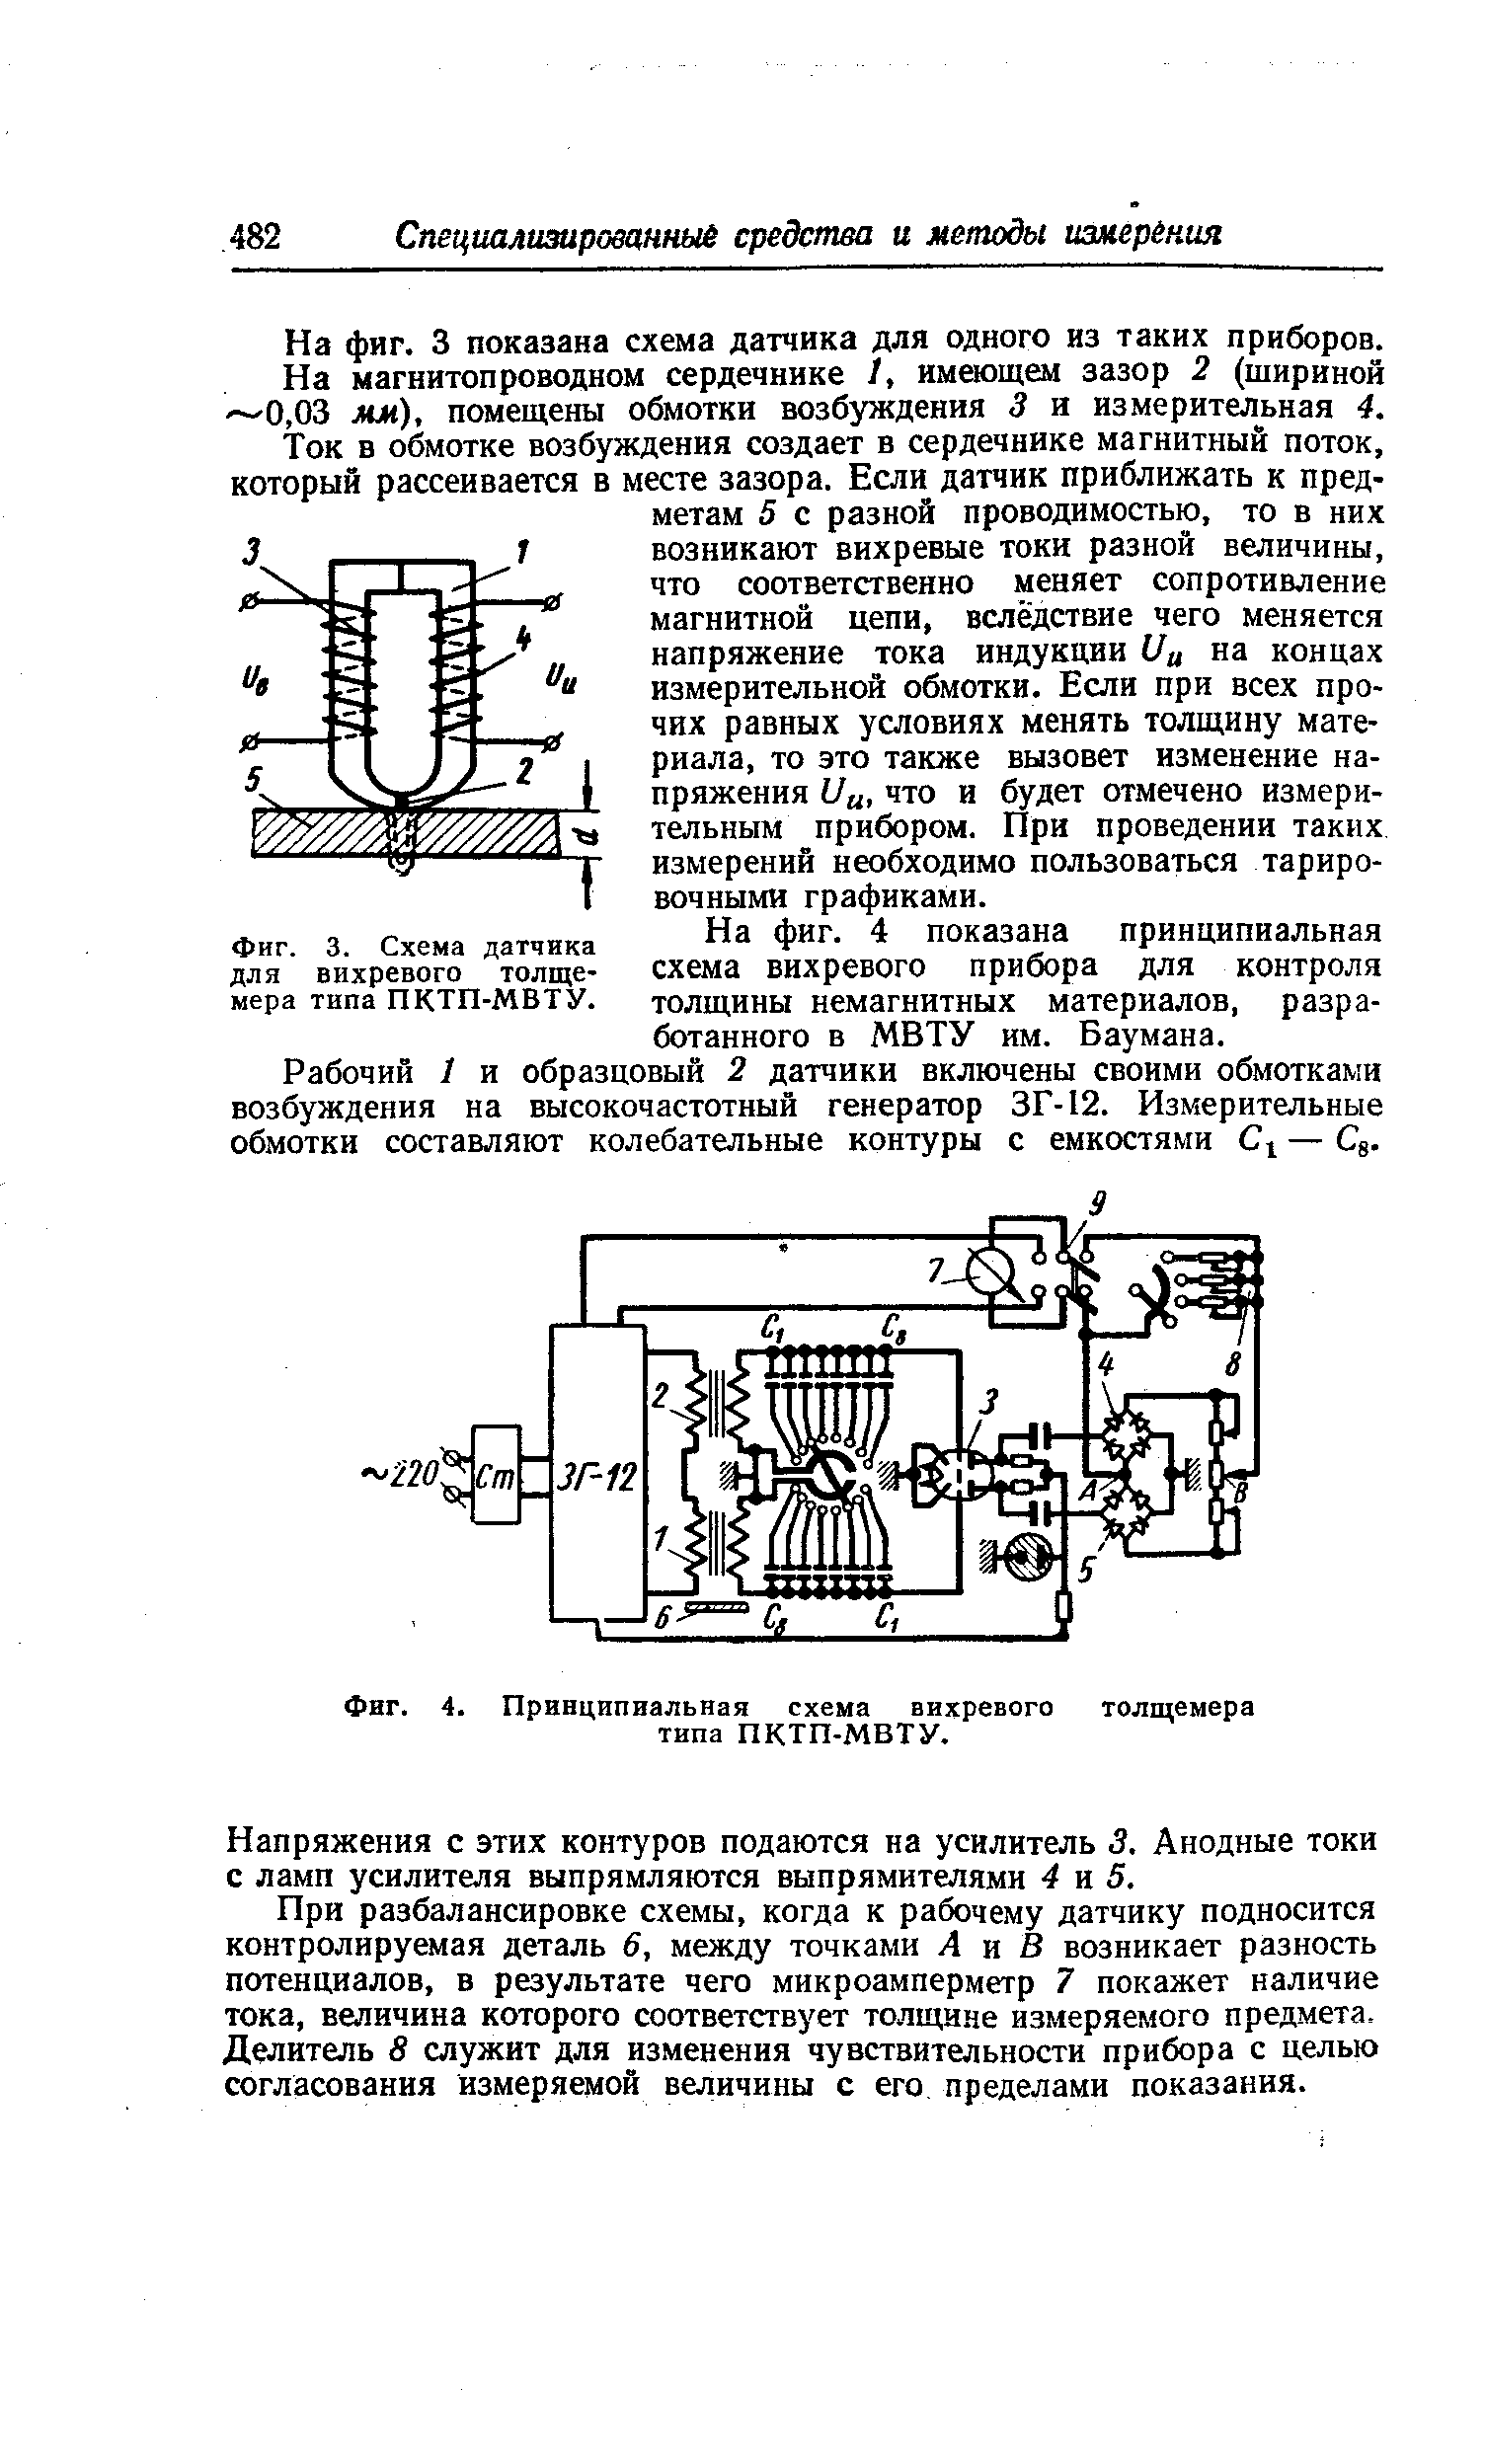 Фиг. 3. Схема датчика для вихревого толщемера типа ПКТП-МВТУ.
